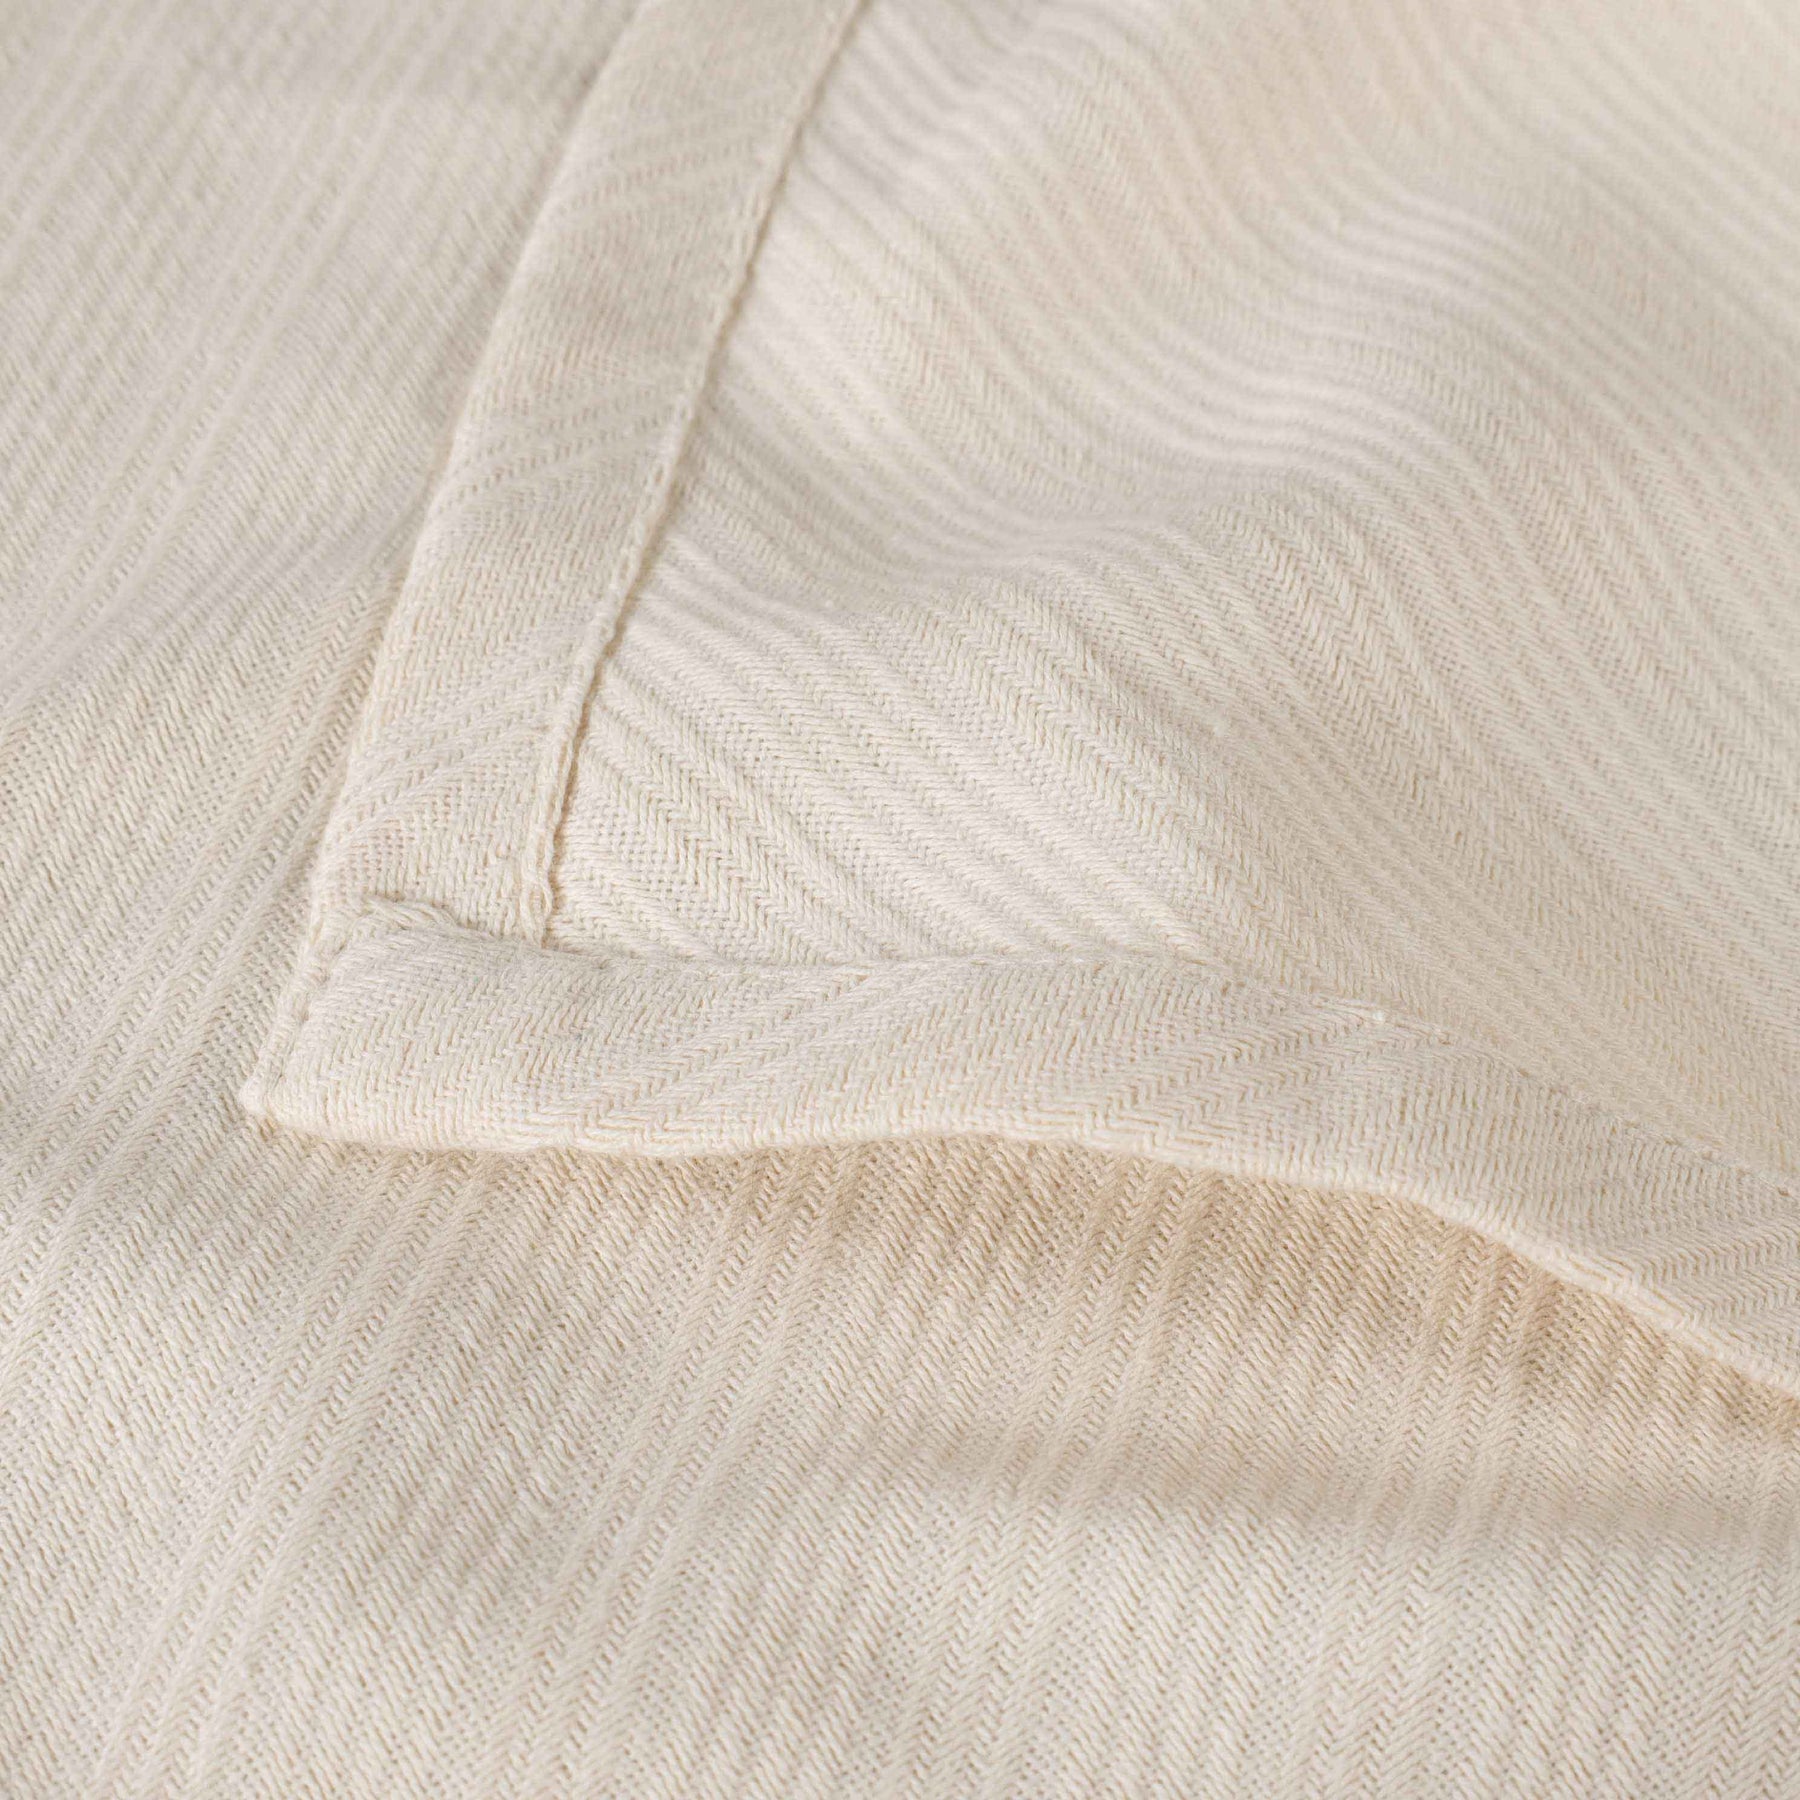 Milan Cotton Textured Jacquard Striped Lightweight Woven Blanket - Ivory